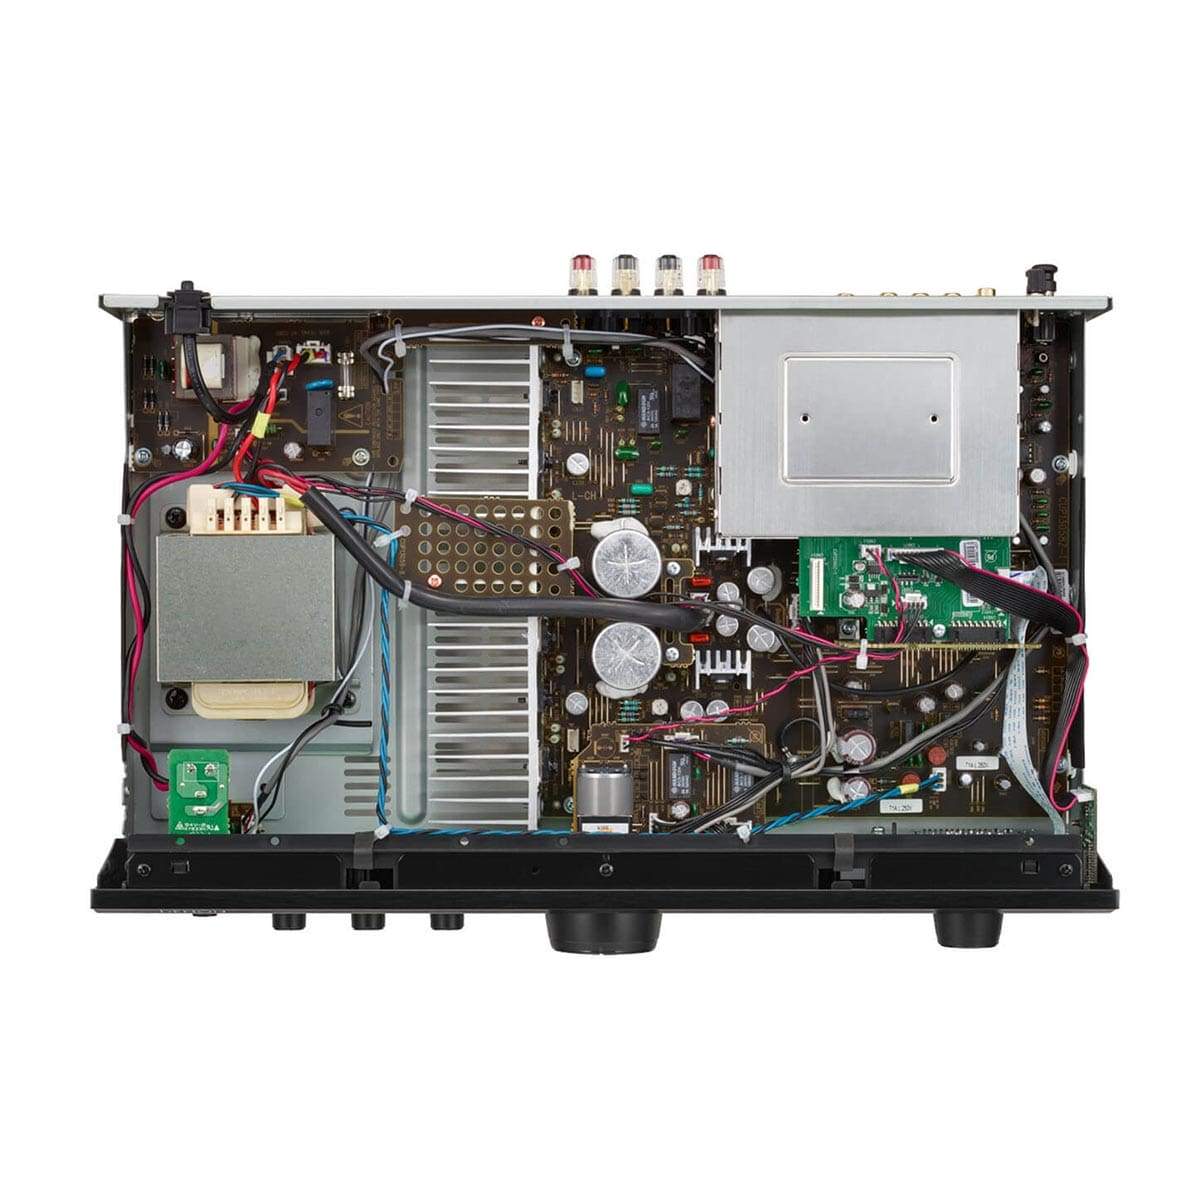 Denon PMA-600NE Integrated Amplifier Review, Page 12